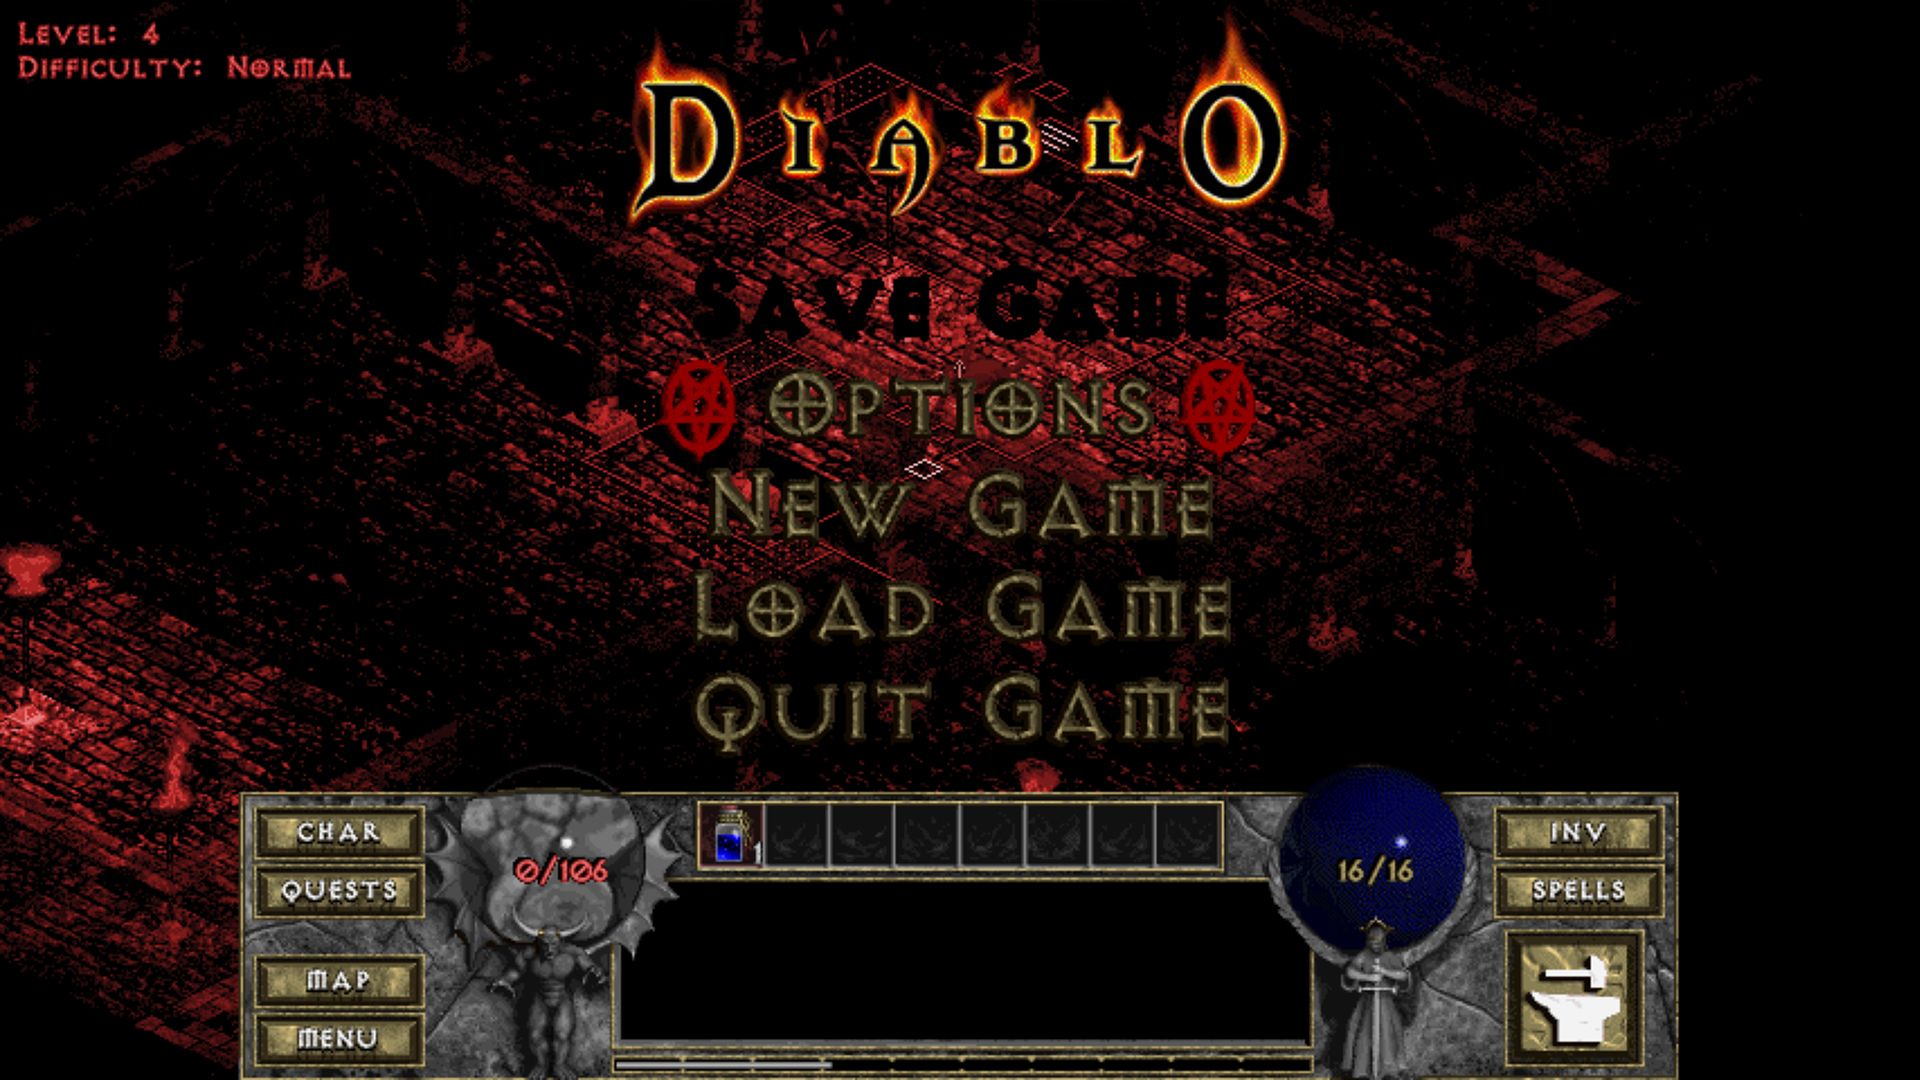 A screenshot showing the death screen in the original Diablo game.